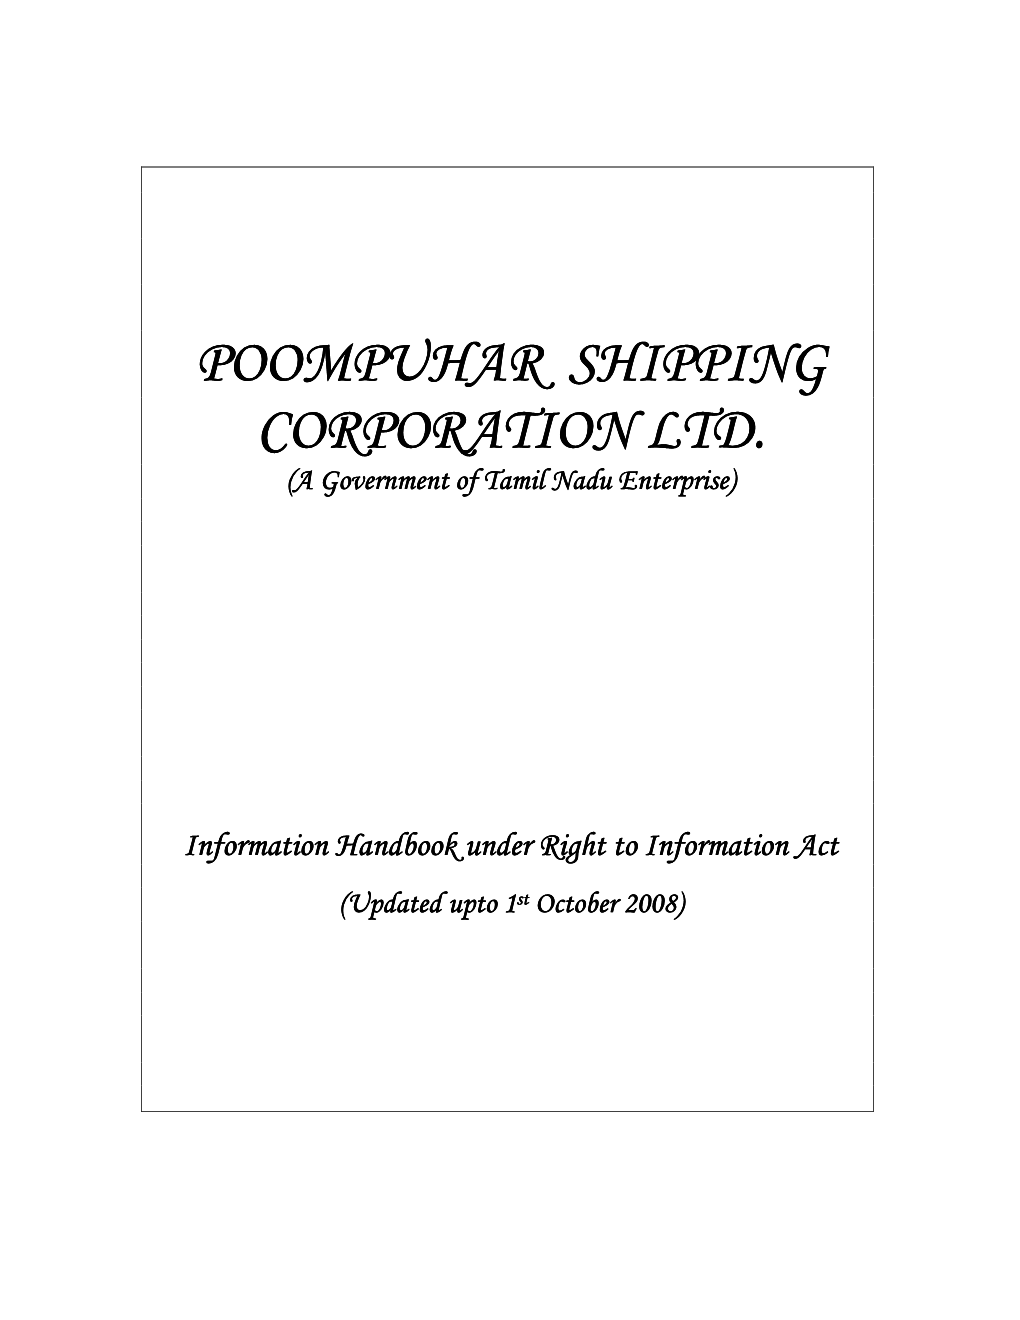 Poompuhar Shipping Corporation Ltd